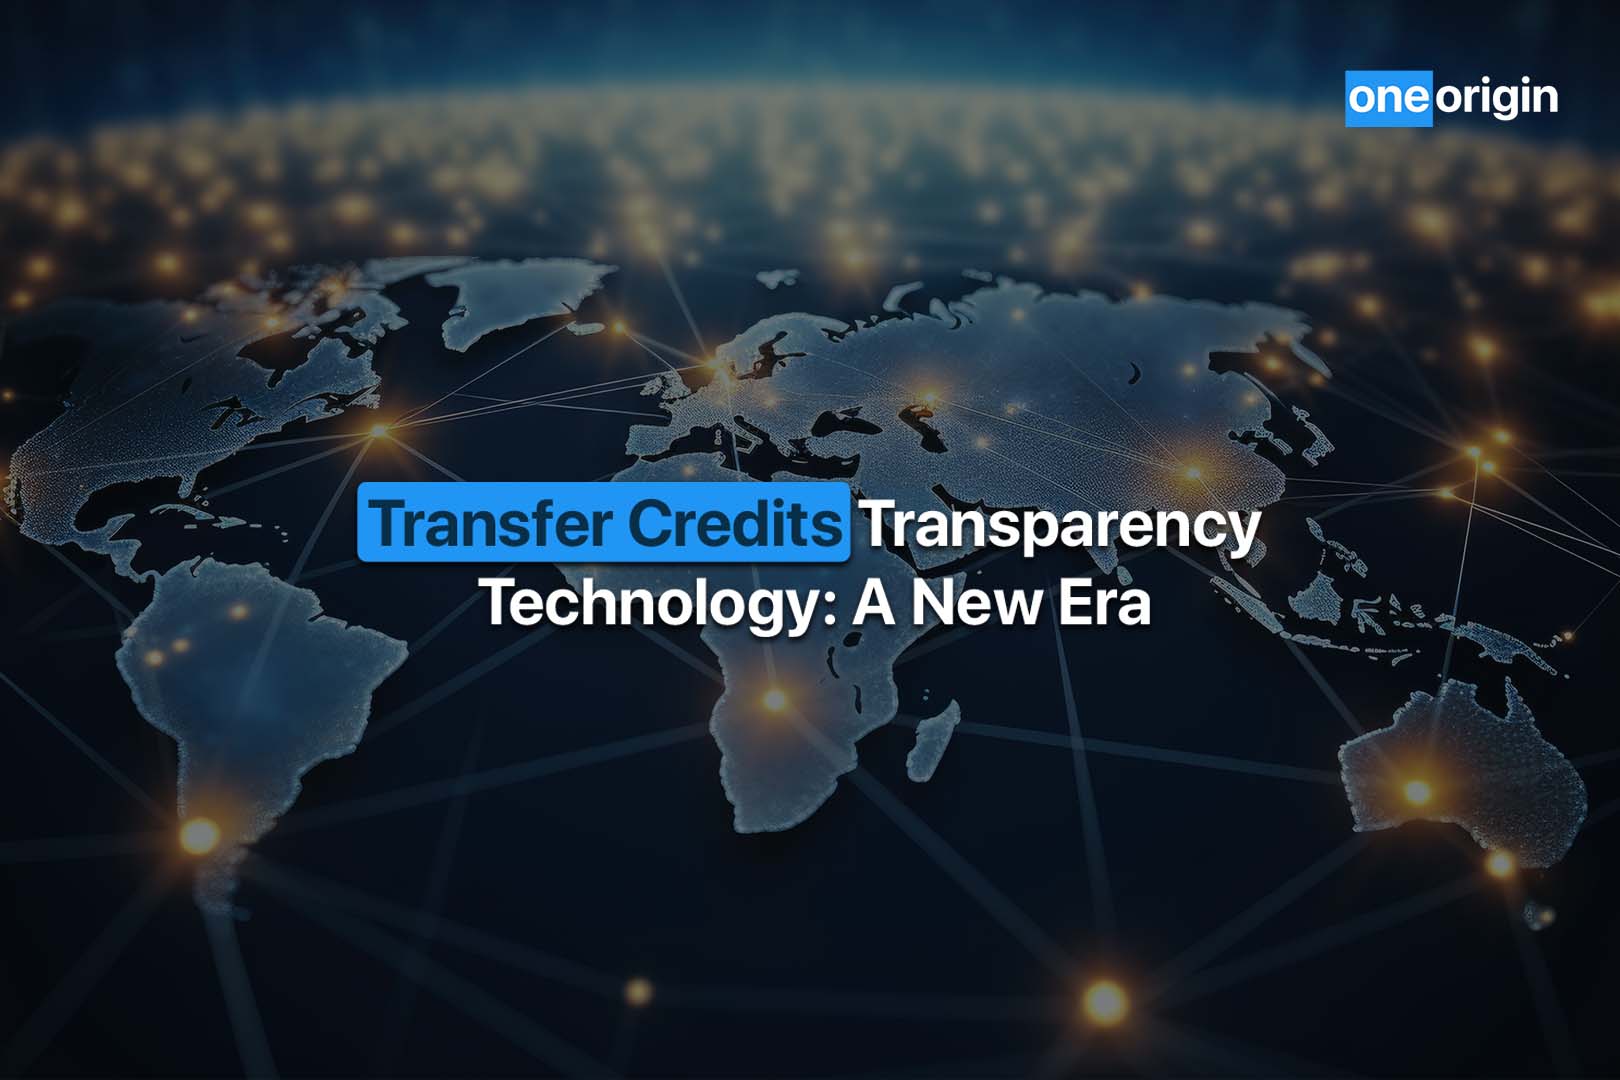 Transfer Credits Transparency Technology: A New Era